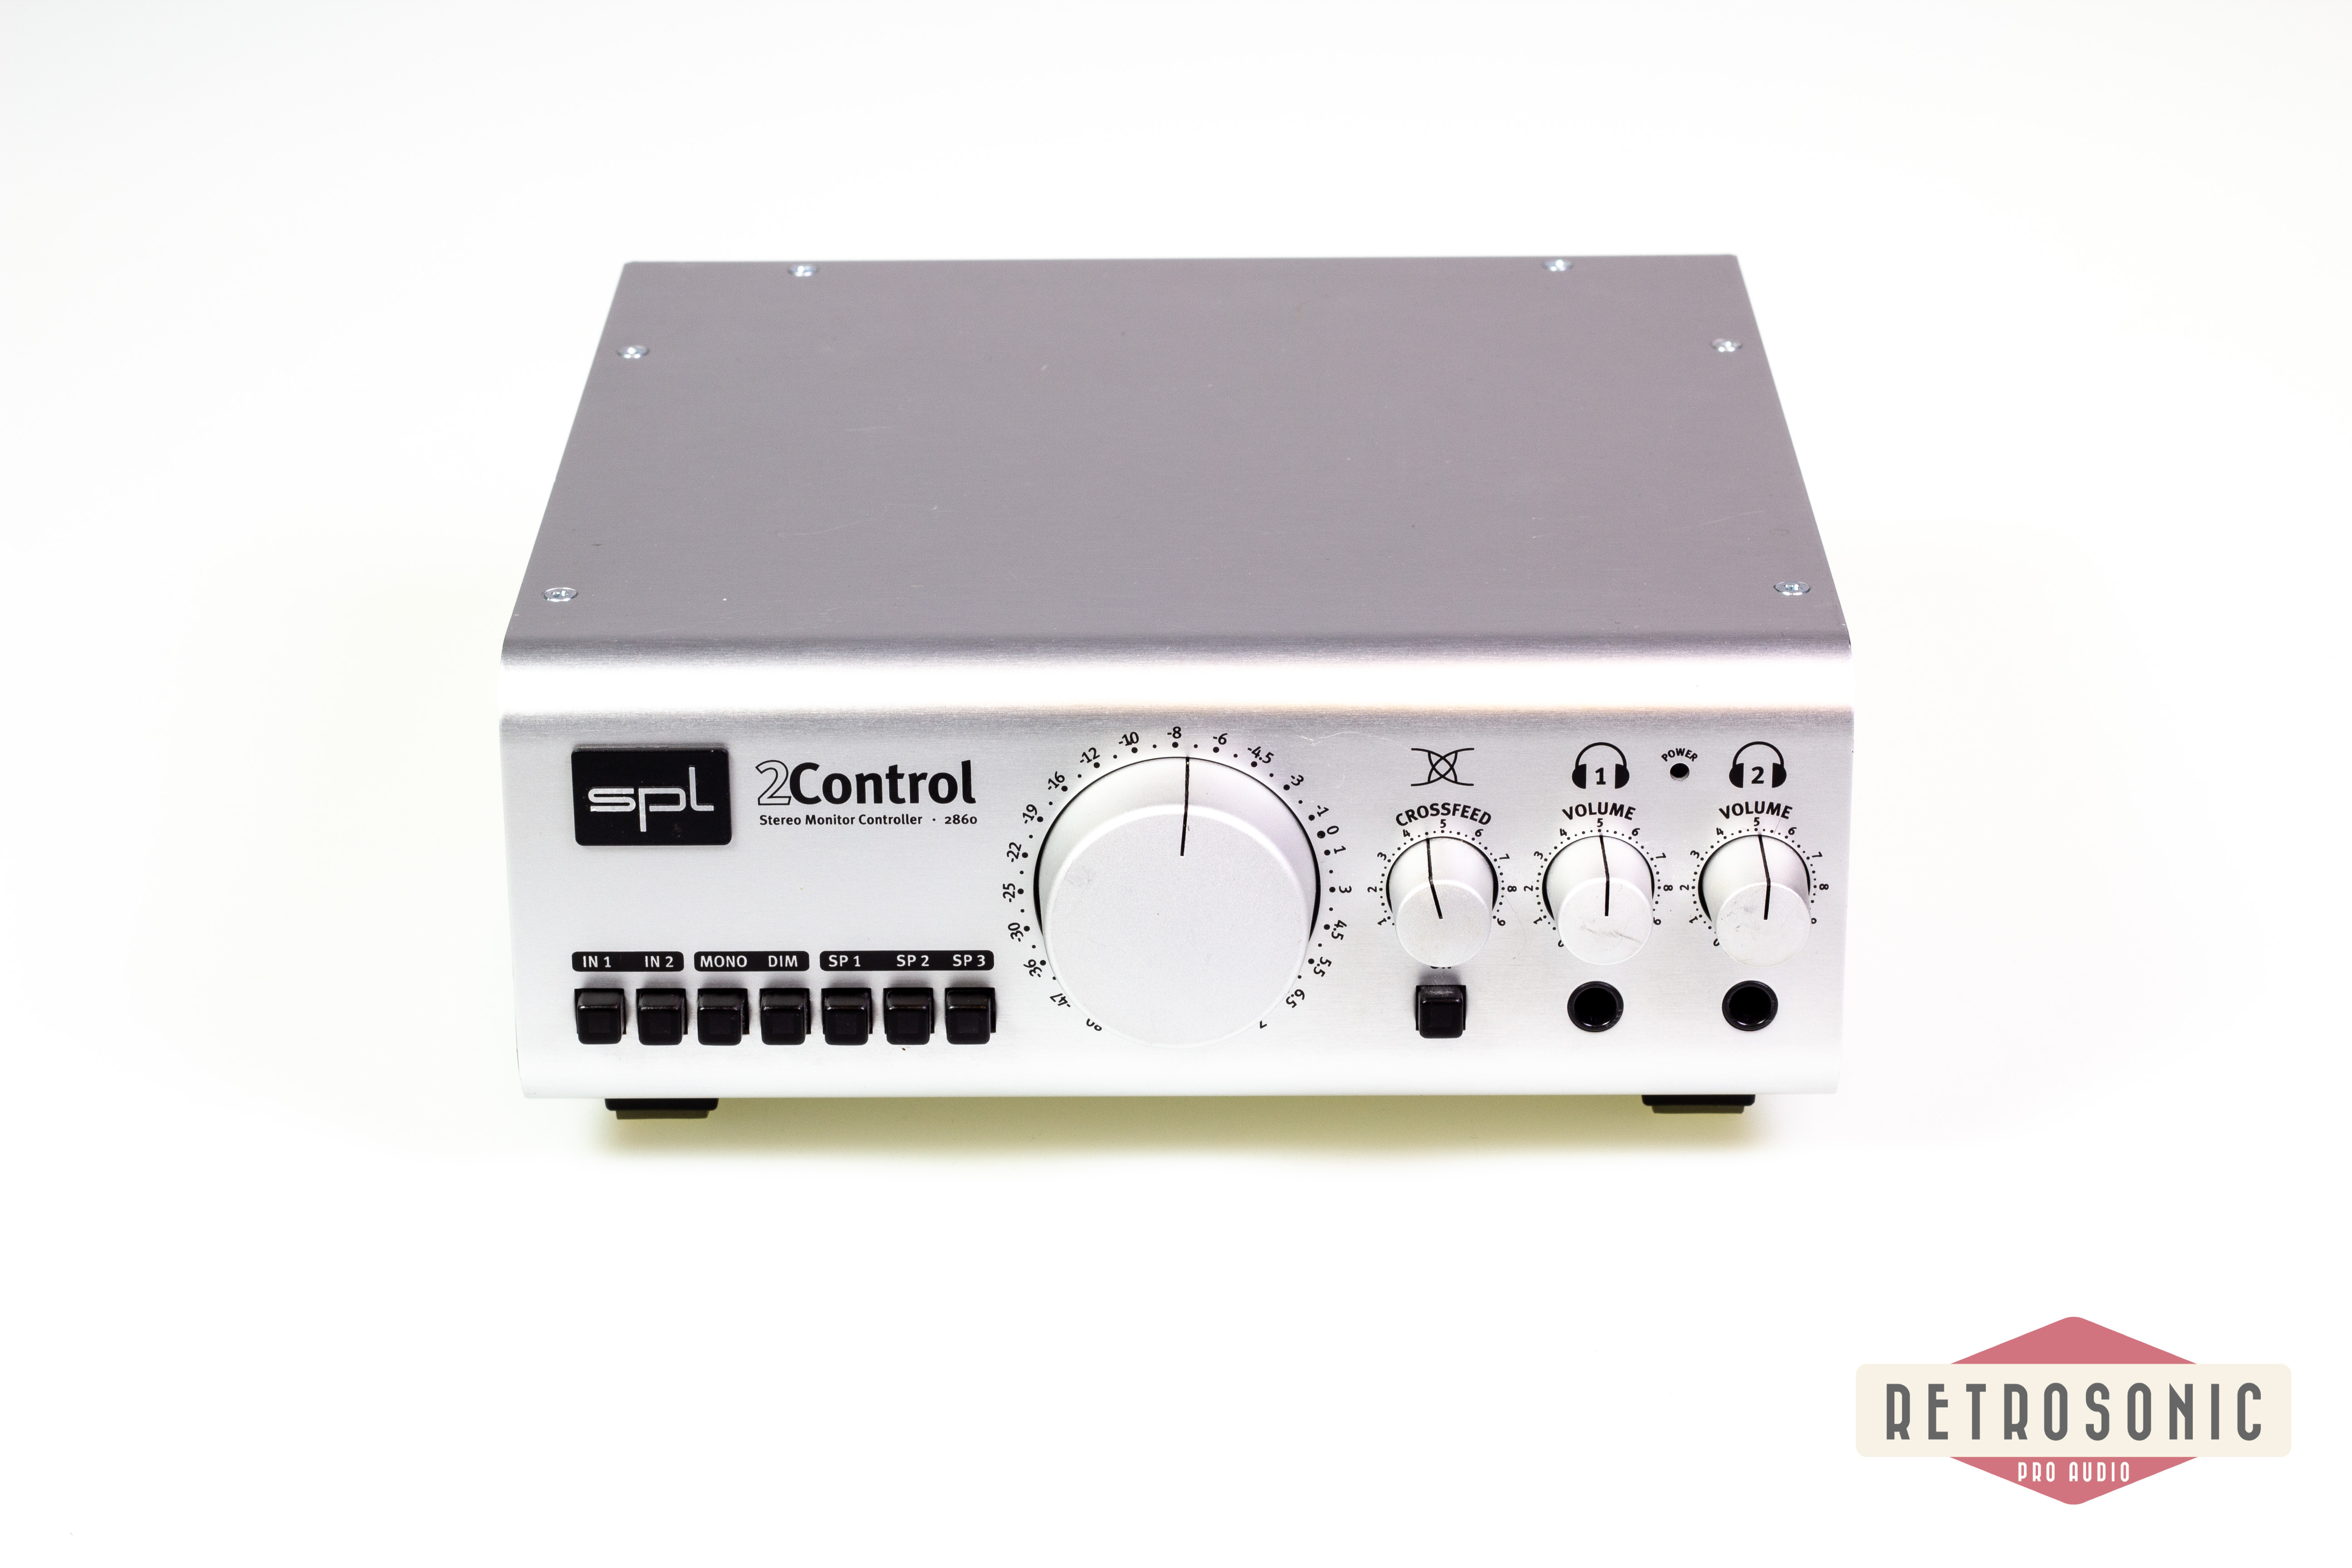 SPL 2Control Monitor Controller Silverface